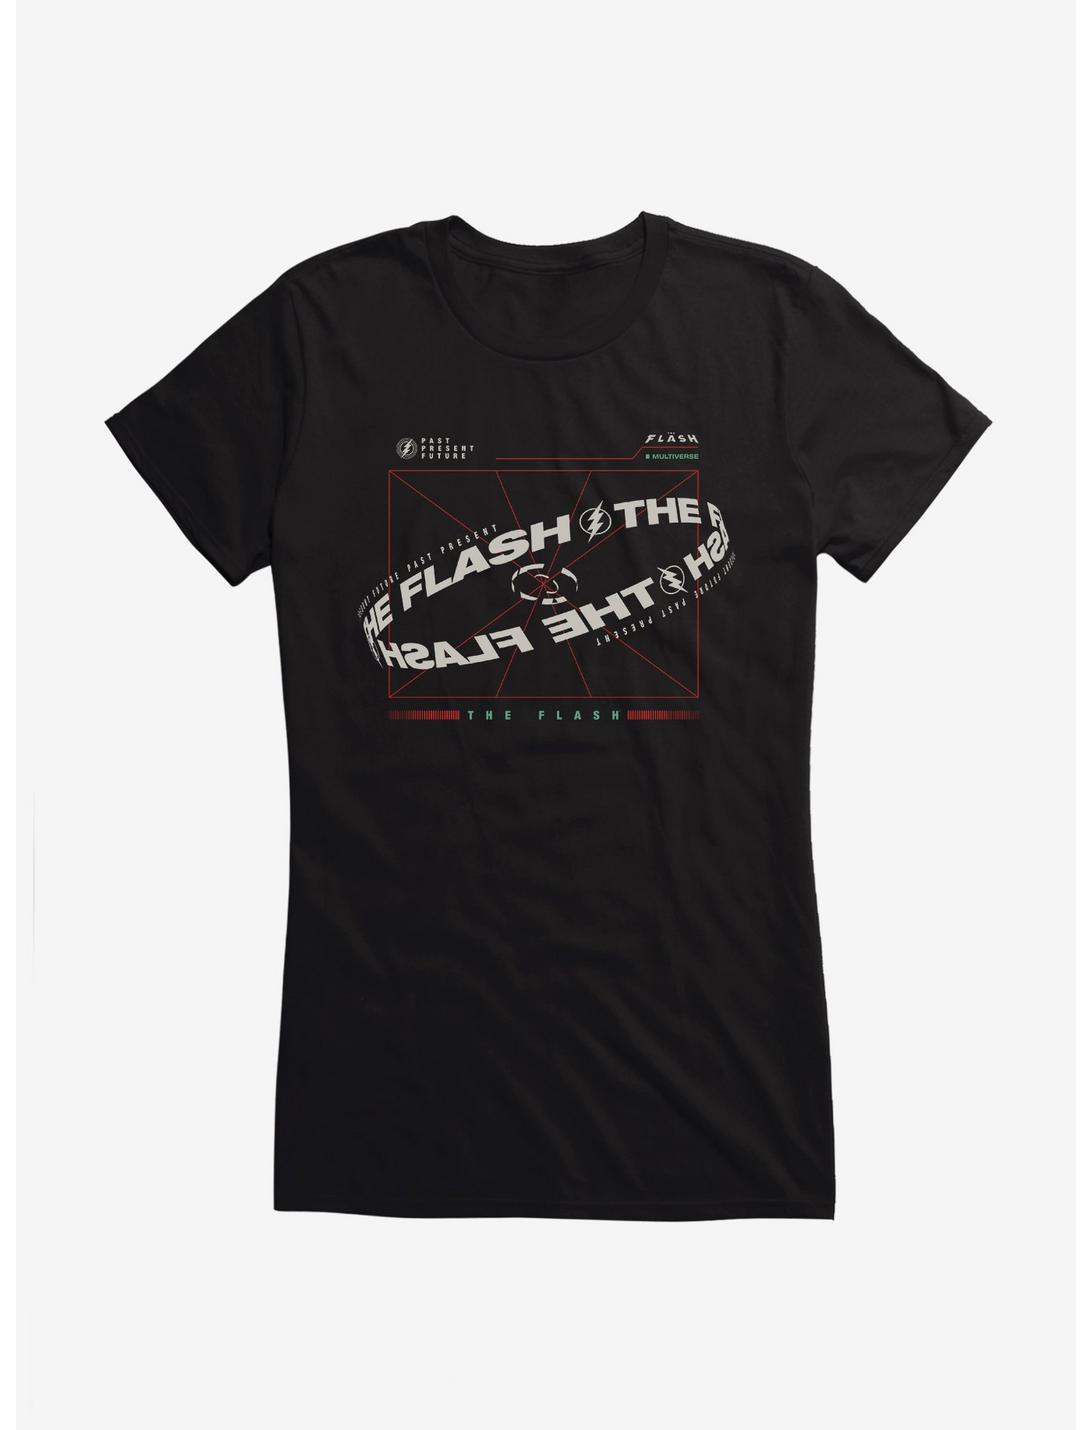 The Flash Past Present Future Scroll Girls T-Shirt, BLACK, hi-res